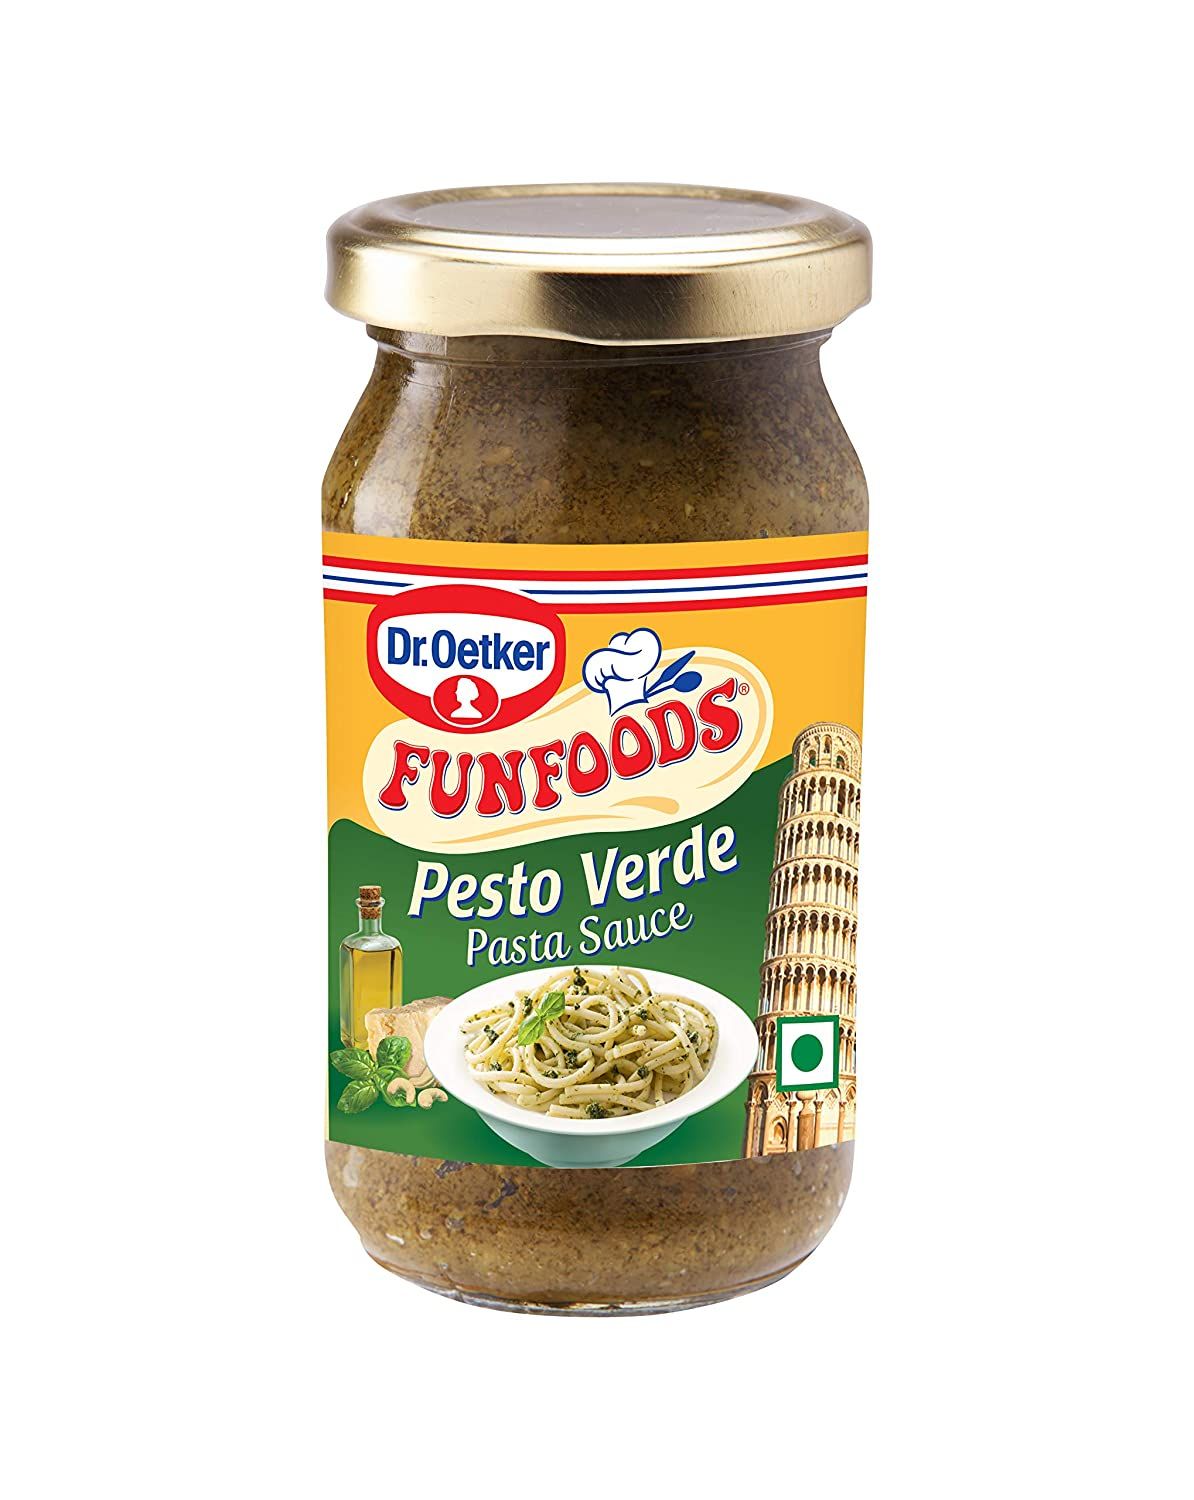 Dr Oetker Pesto Verde Pasta Sauce Image